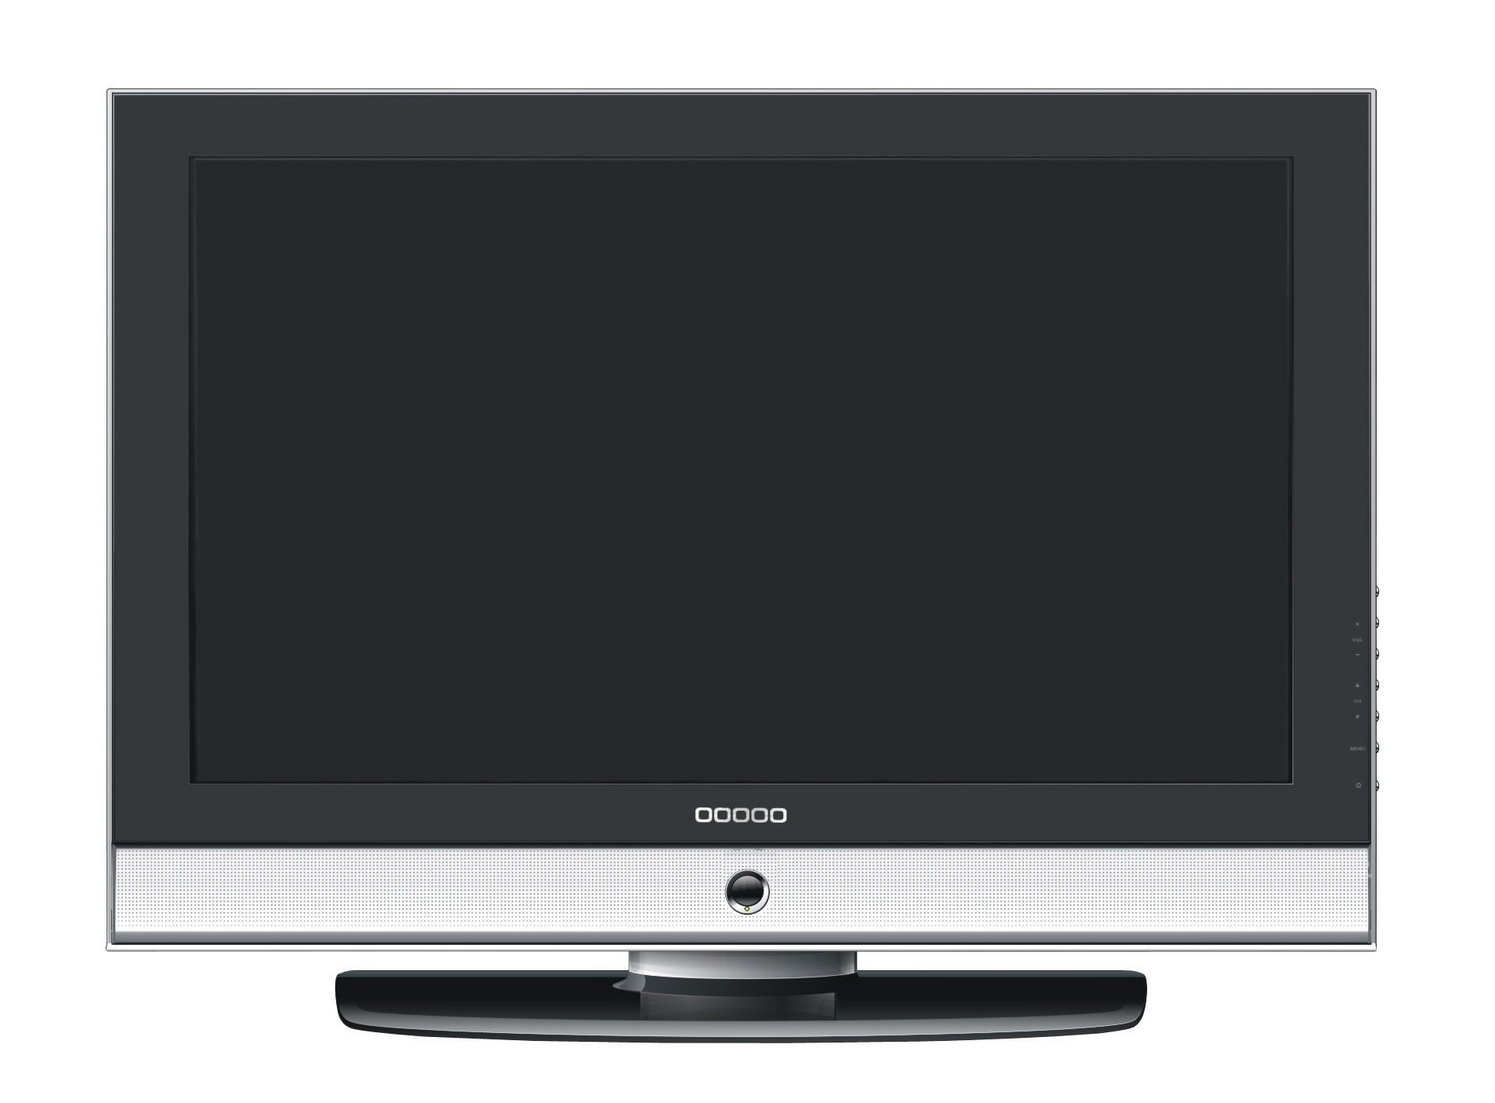 37 LCD TV (37 LCD TV)